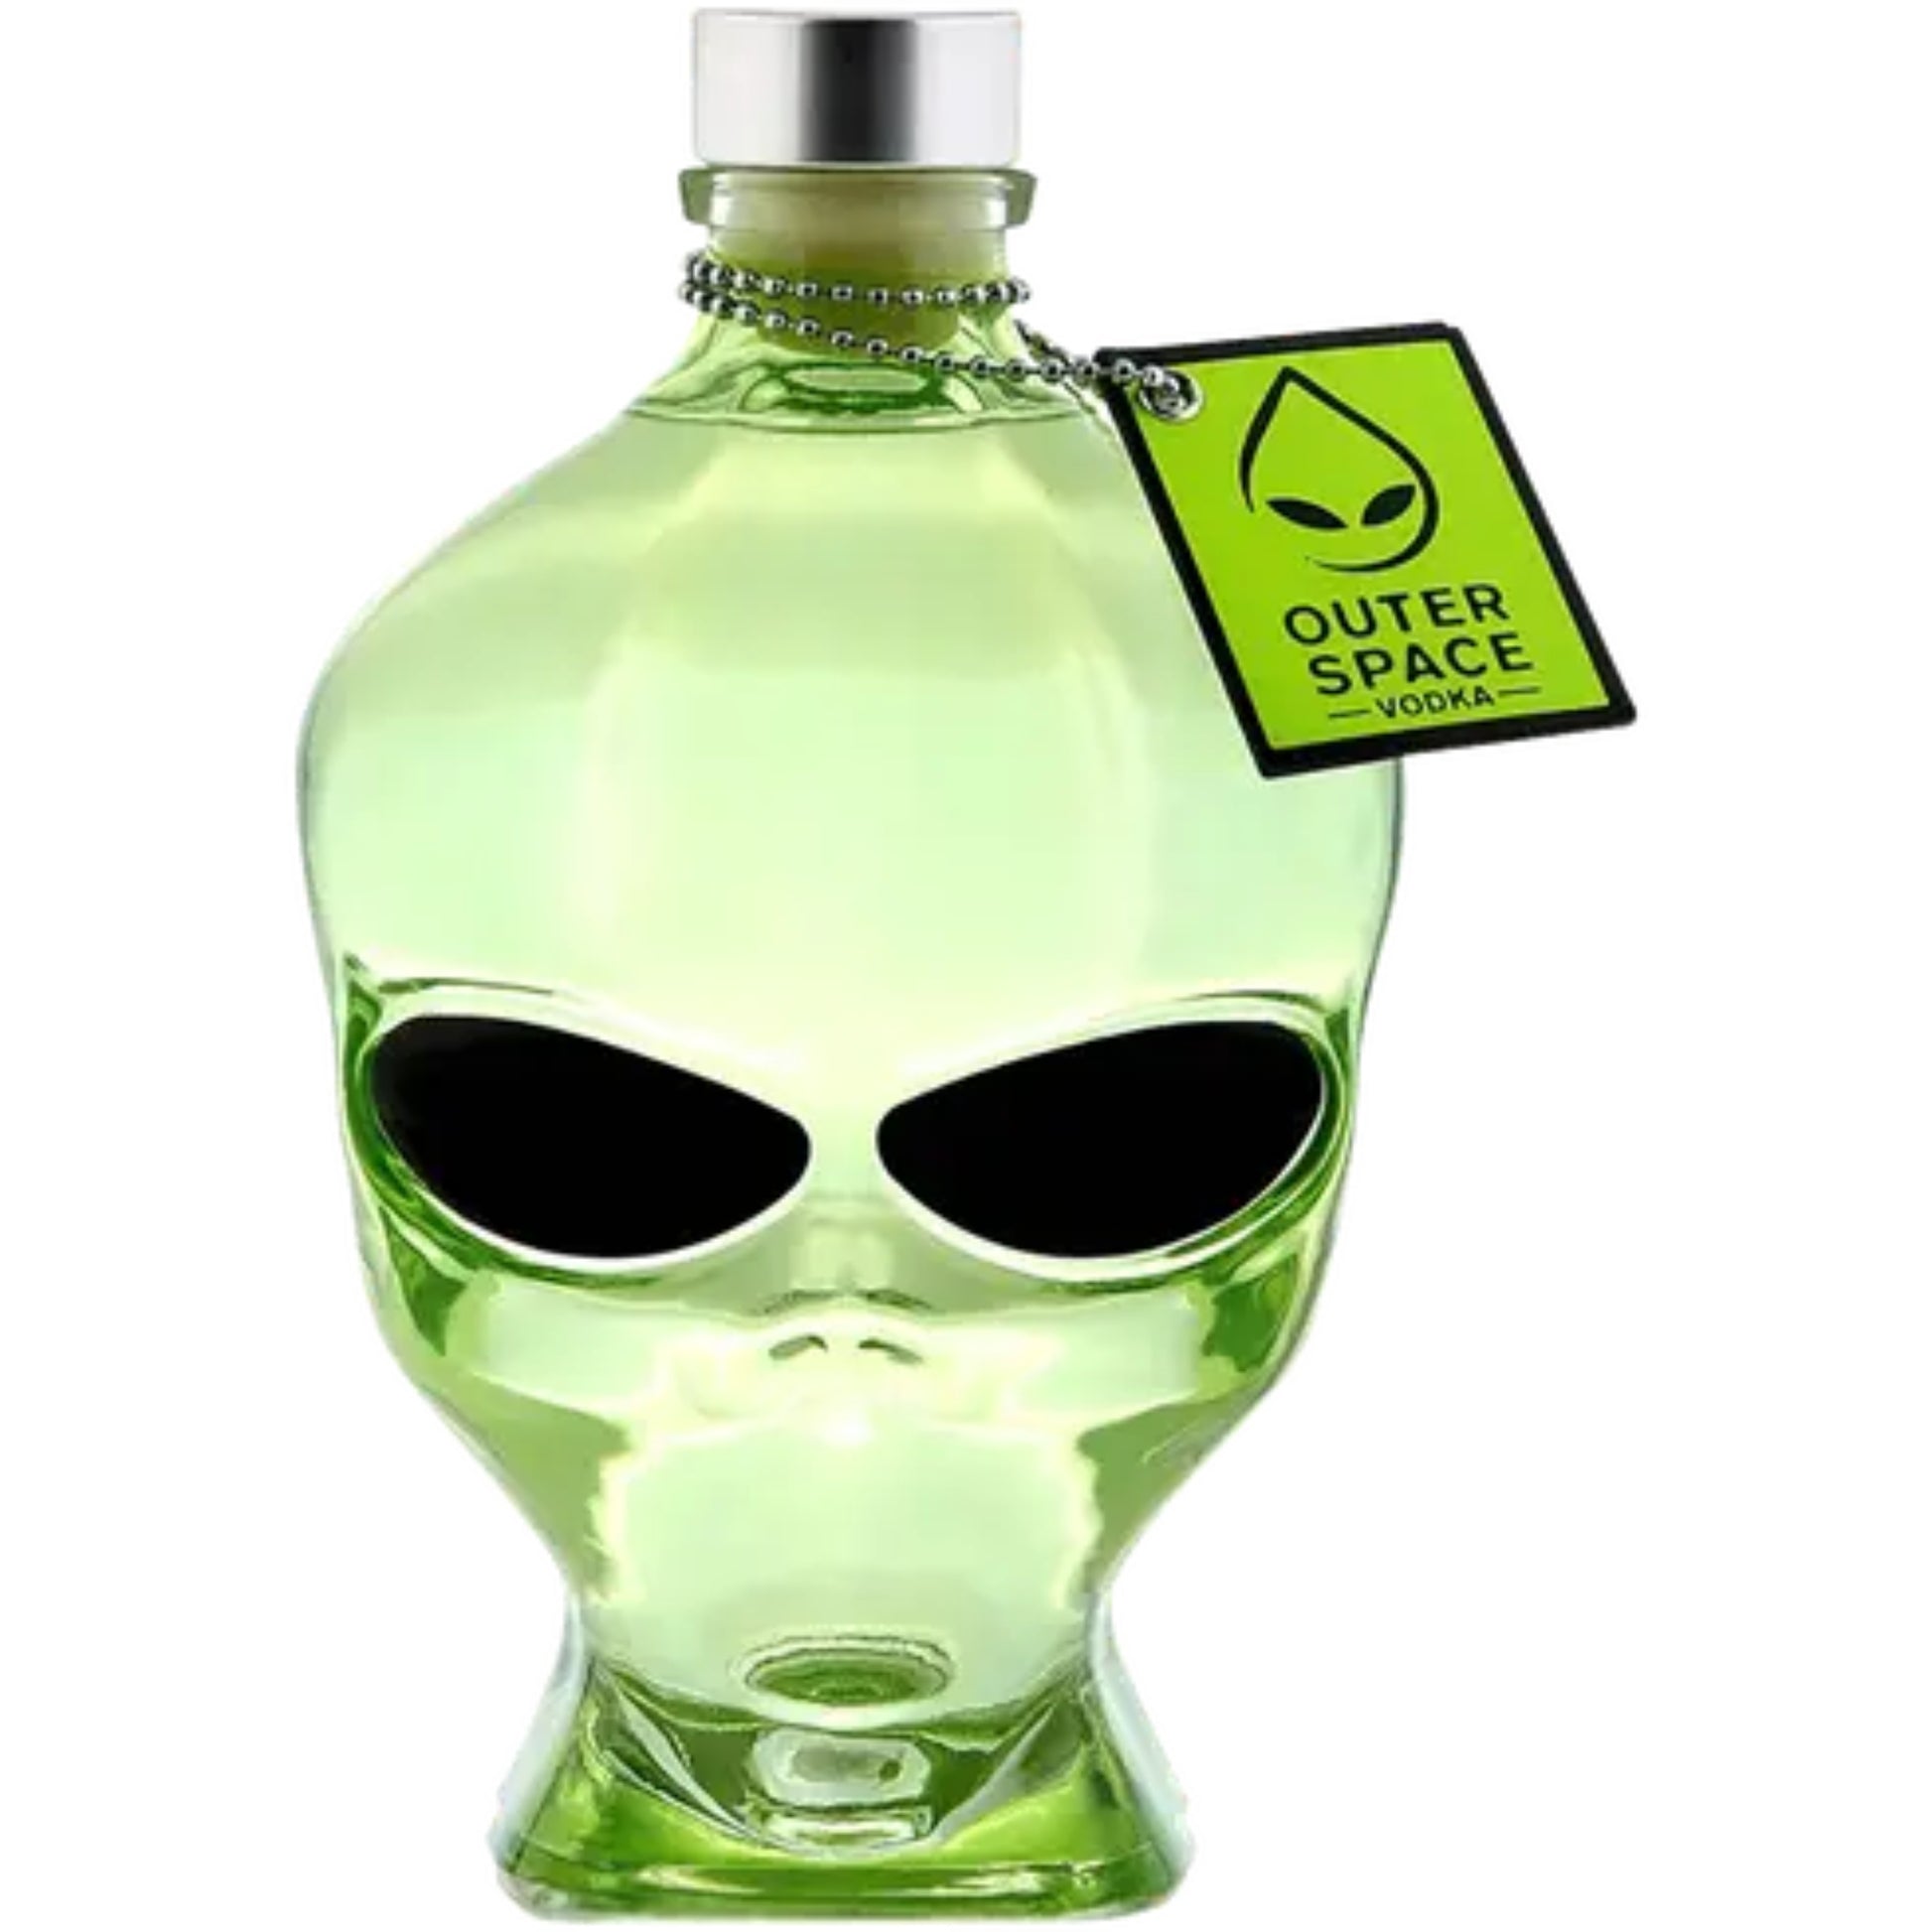 Outer Space Vodka - Liquor Geeks